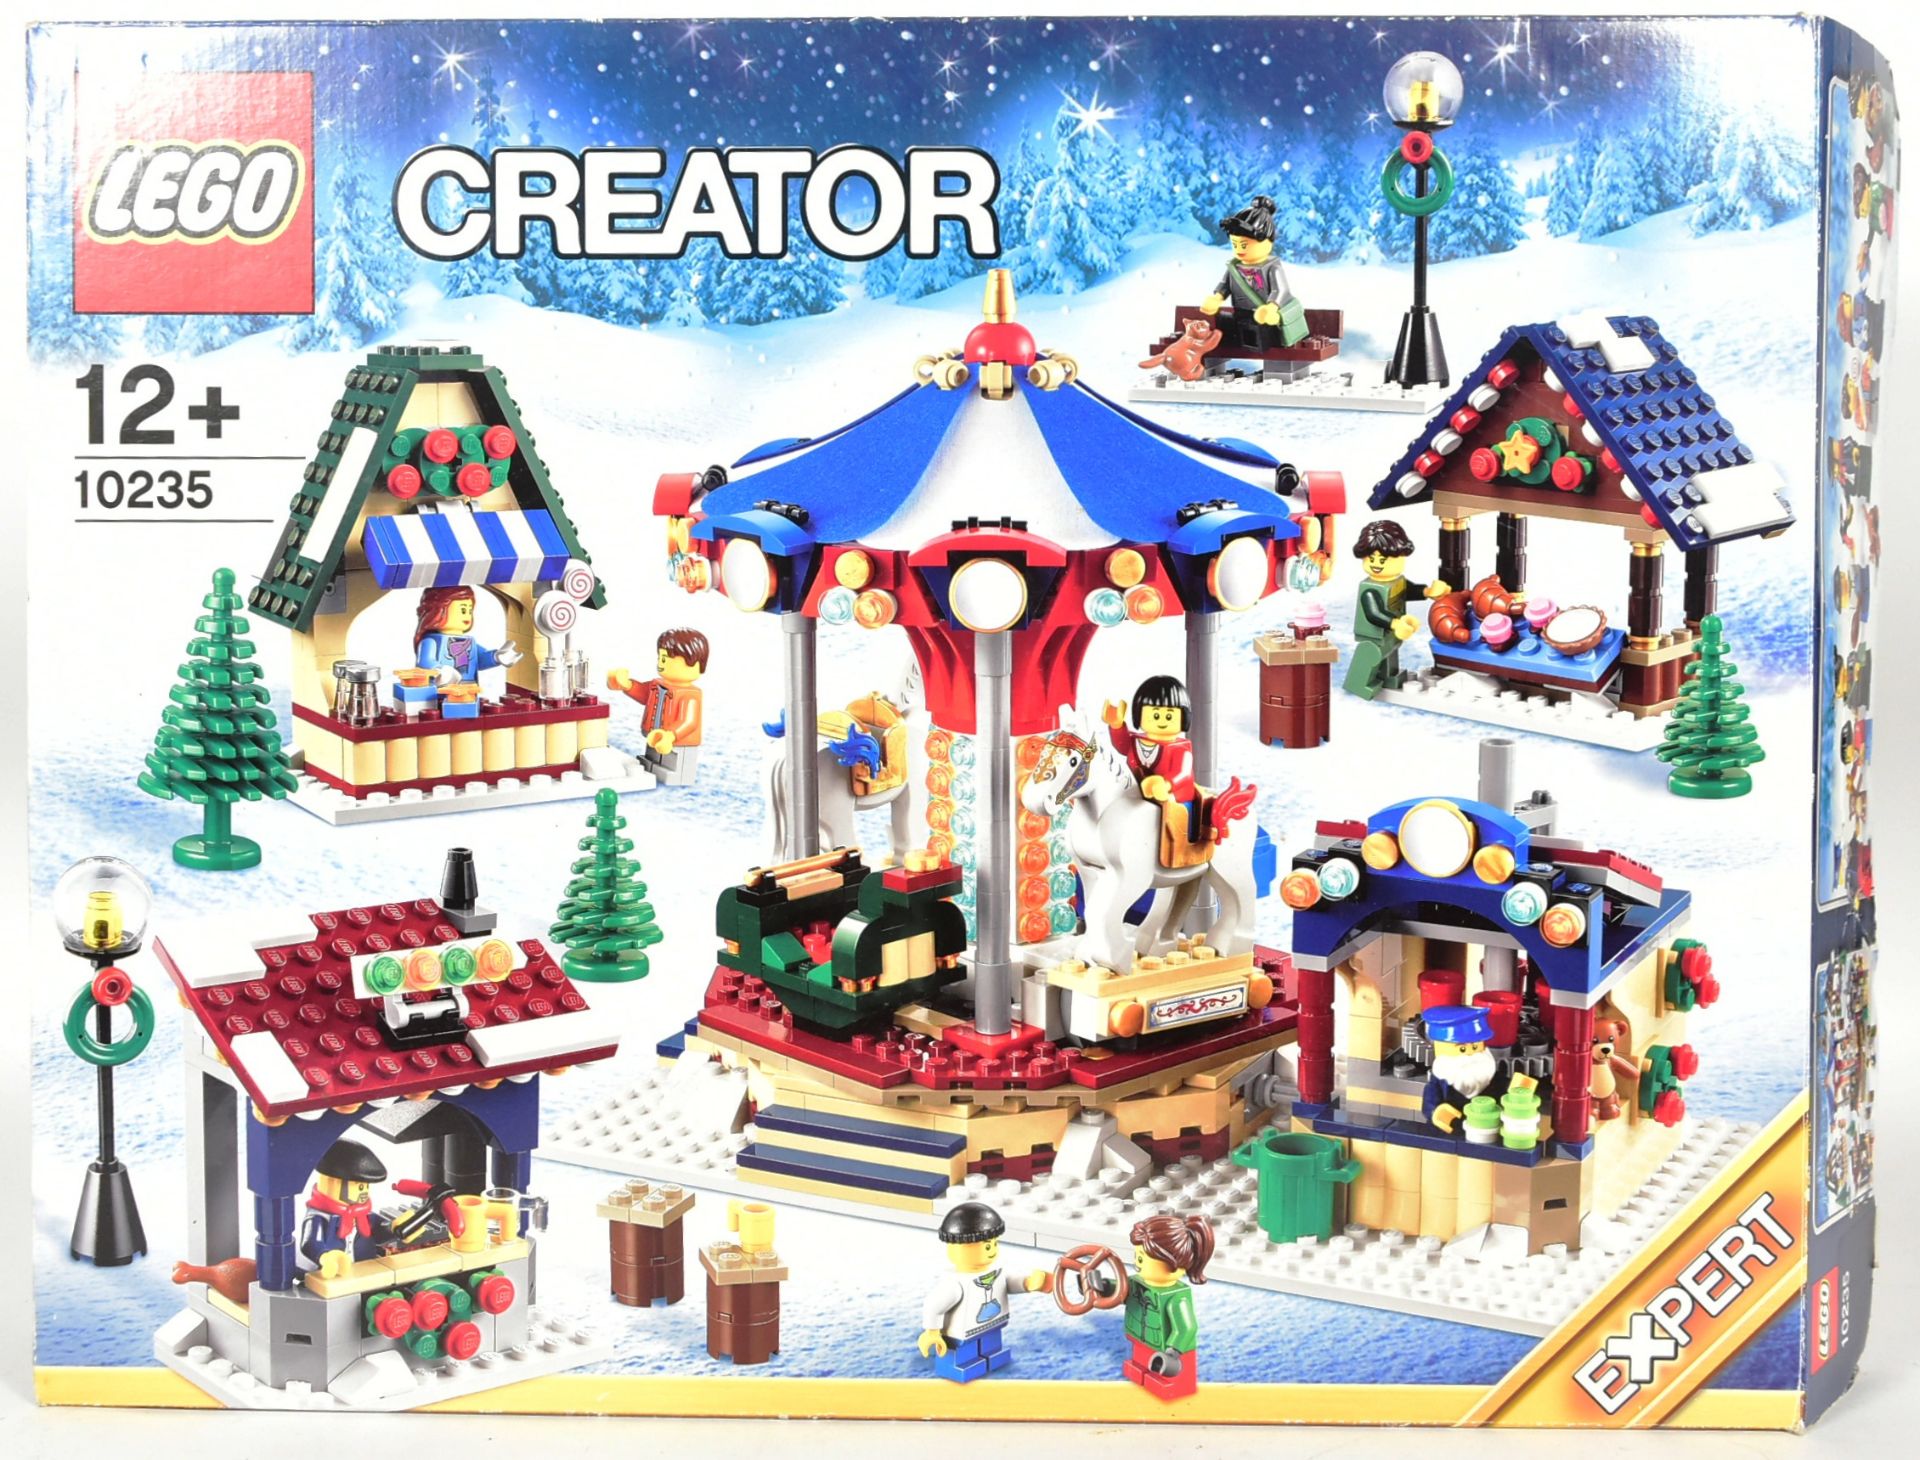 LEGO - CREATOR - 10235 - WINTER VILLAGE MARKET - Image 5 of 5